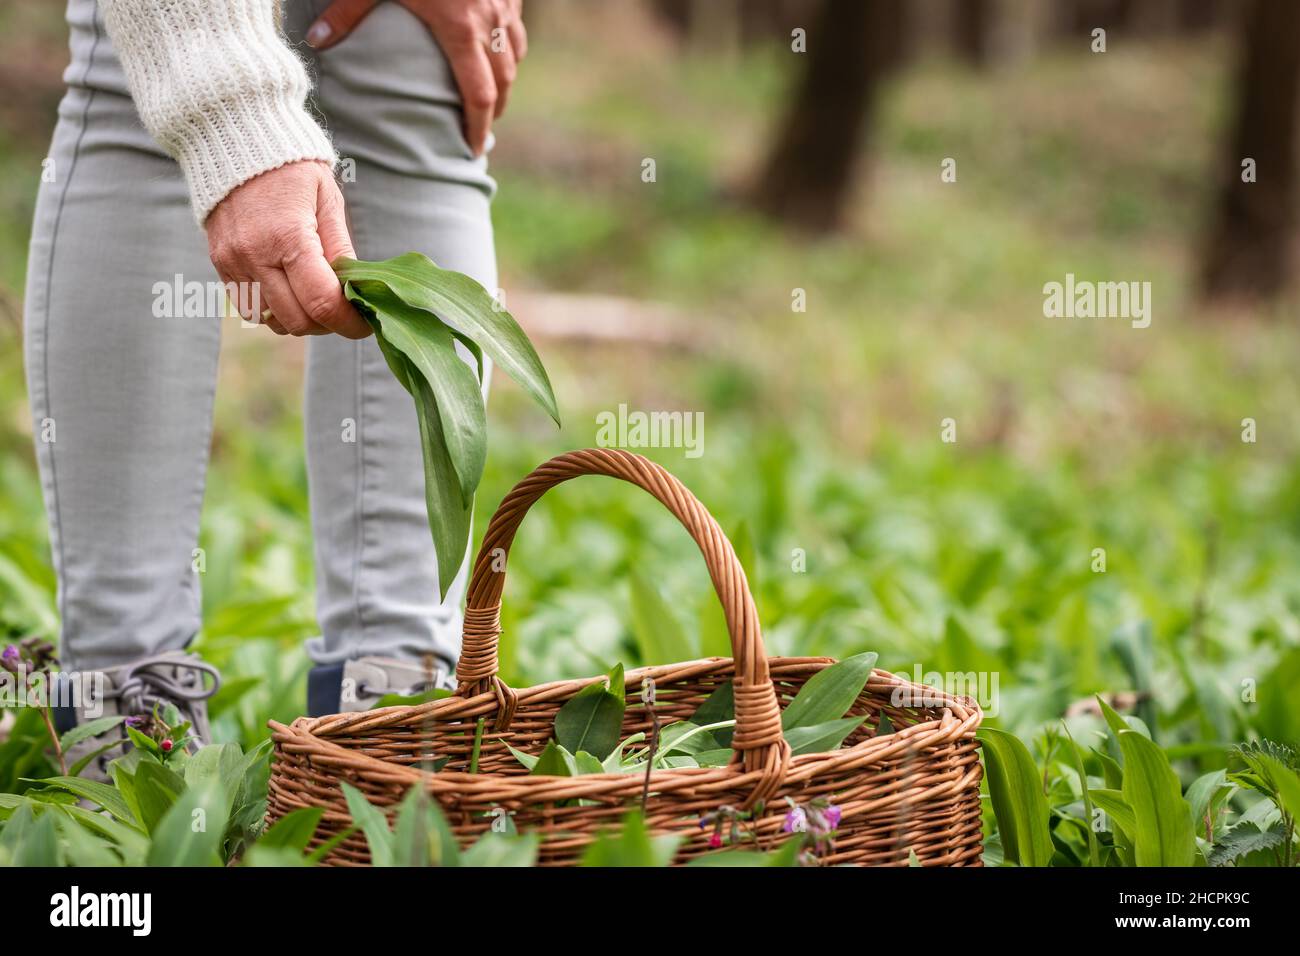 Woman picking Wild Garlic (allium ursinum) in forest. Harvesting Ramson leaves herb into wicker basket Stock Photo